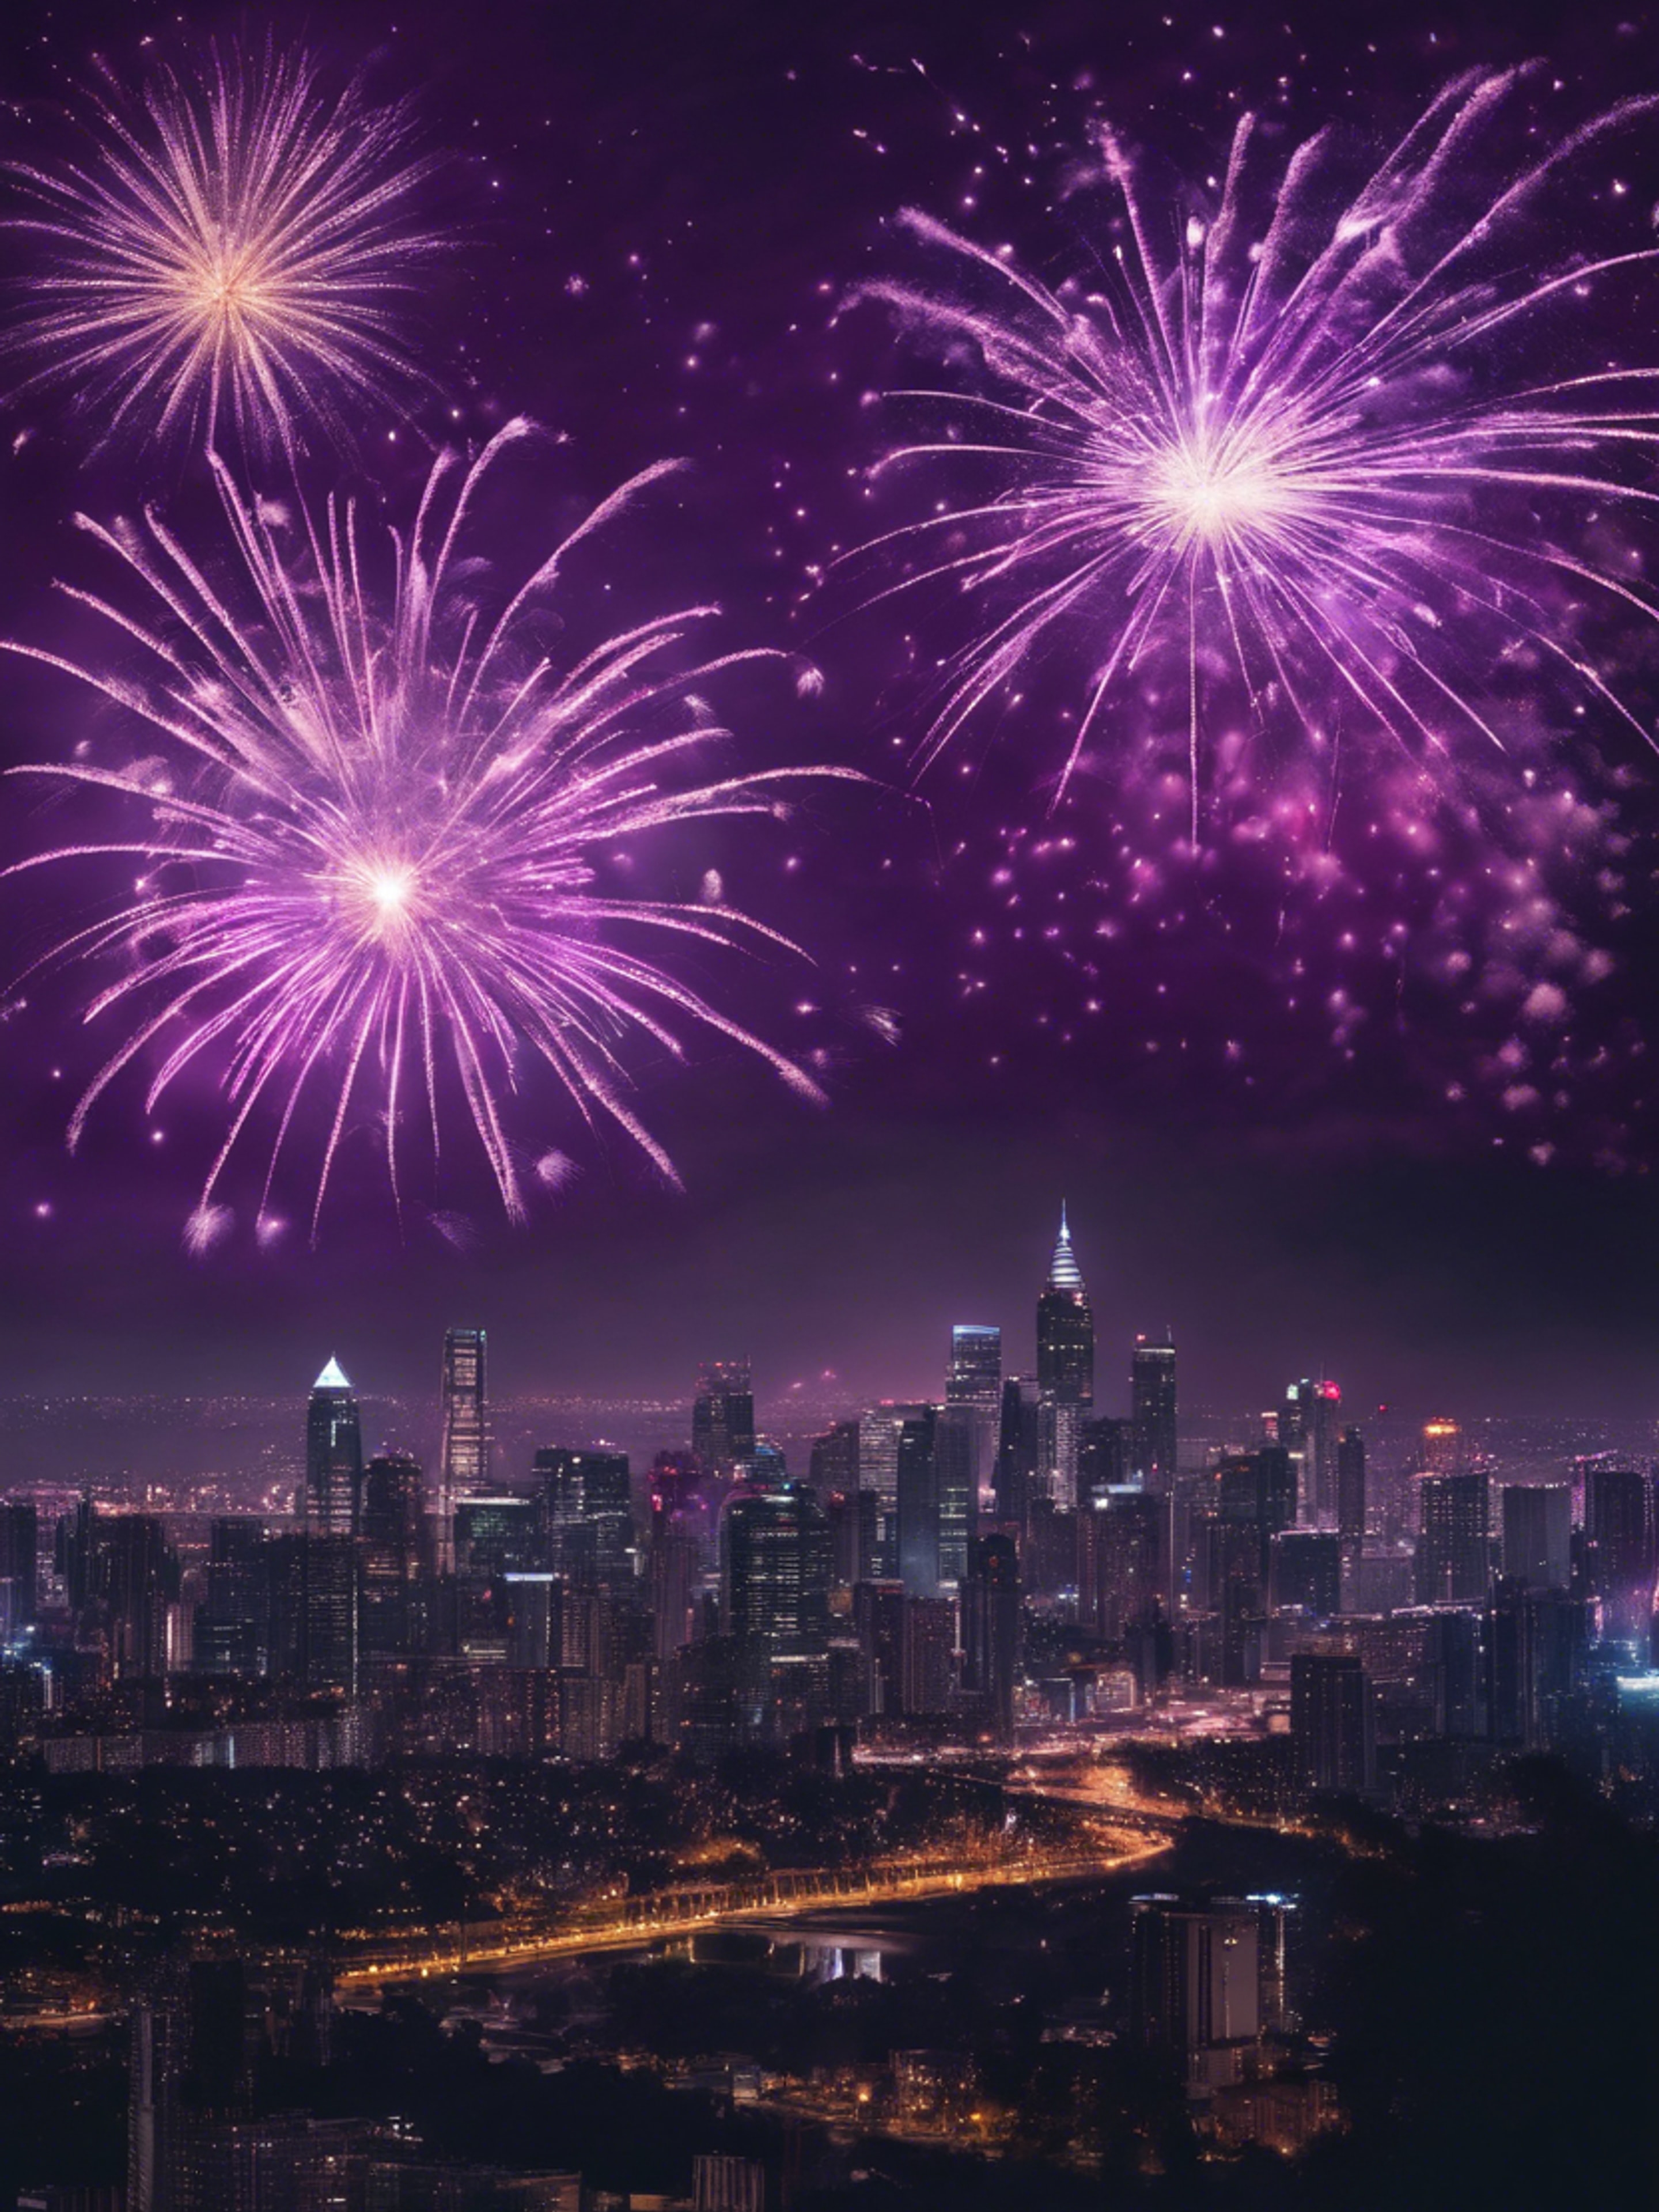 Dark purple fireworks illuminating the night's sky over an illuminated city skyline. کاغذ دیواری[a2398988017f44d3a04c]